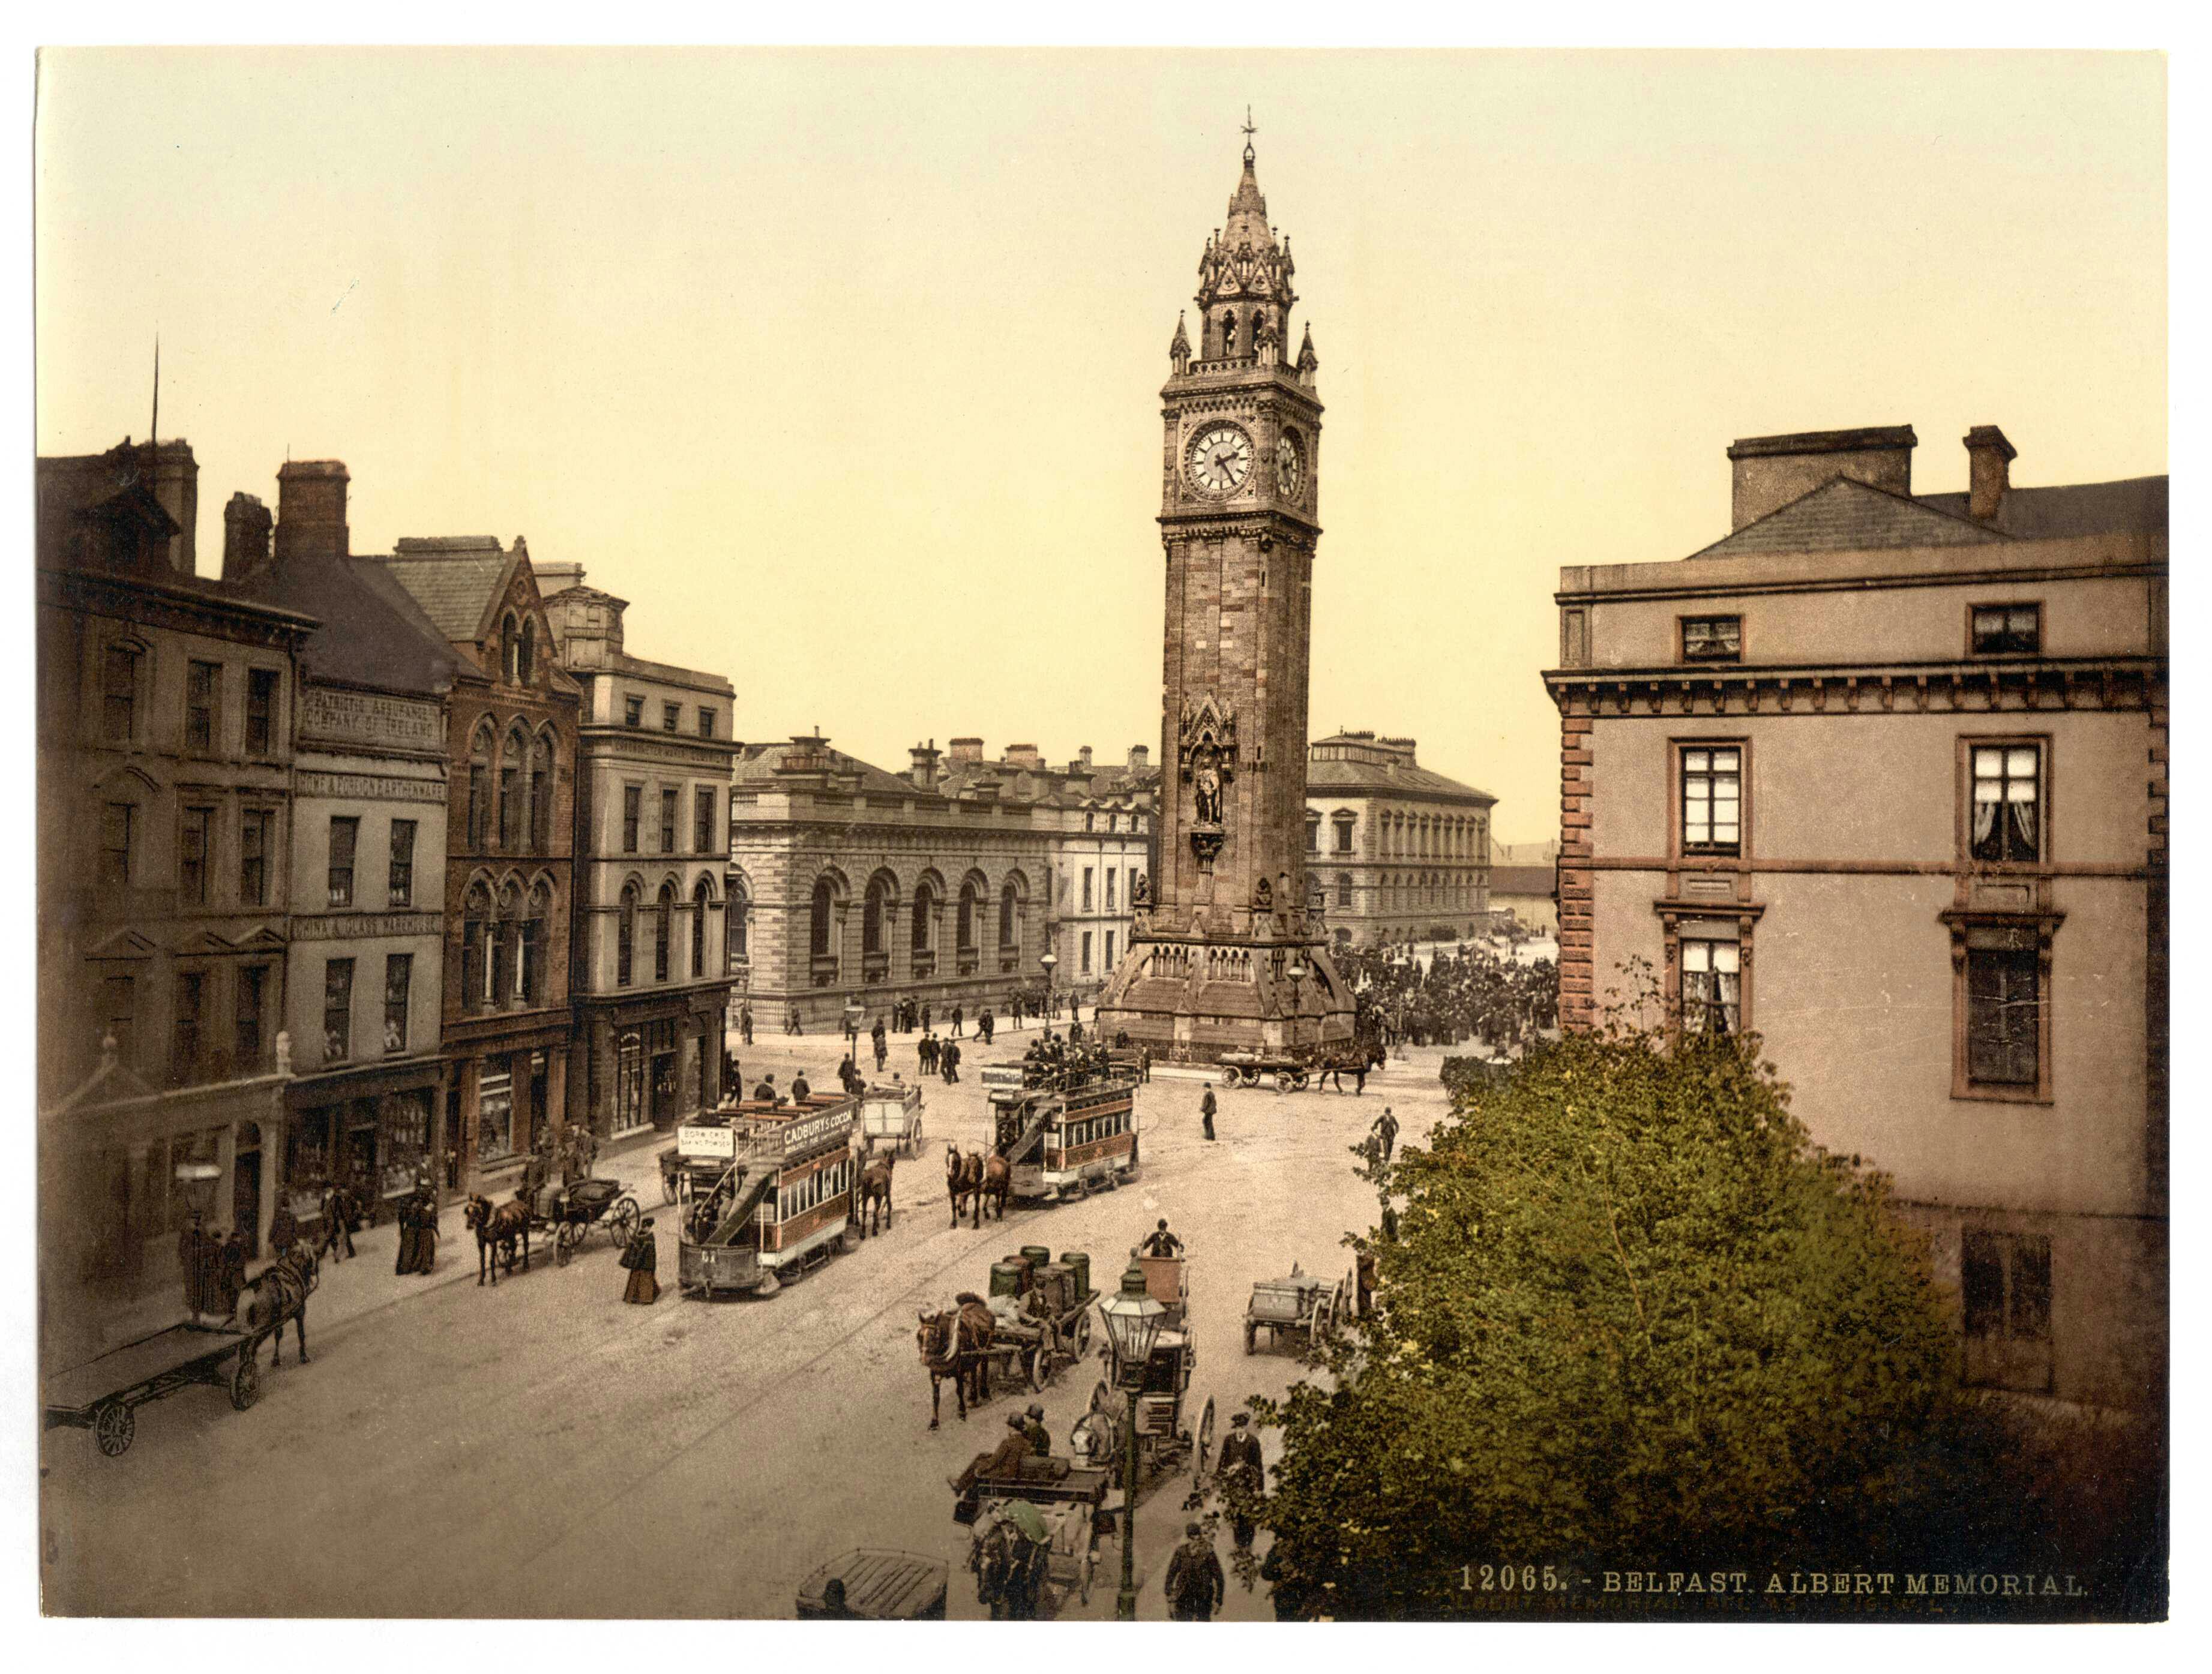 Albert Memorial, Belfast, from the Views of Ireland collection